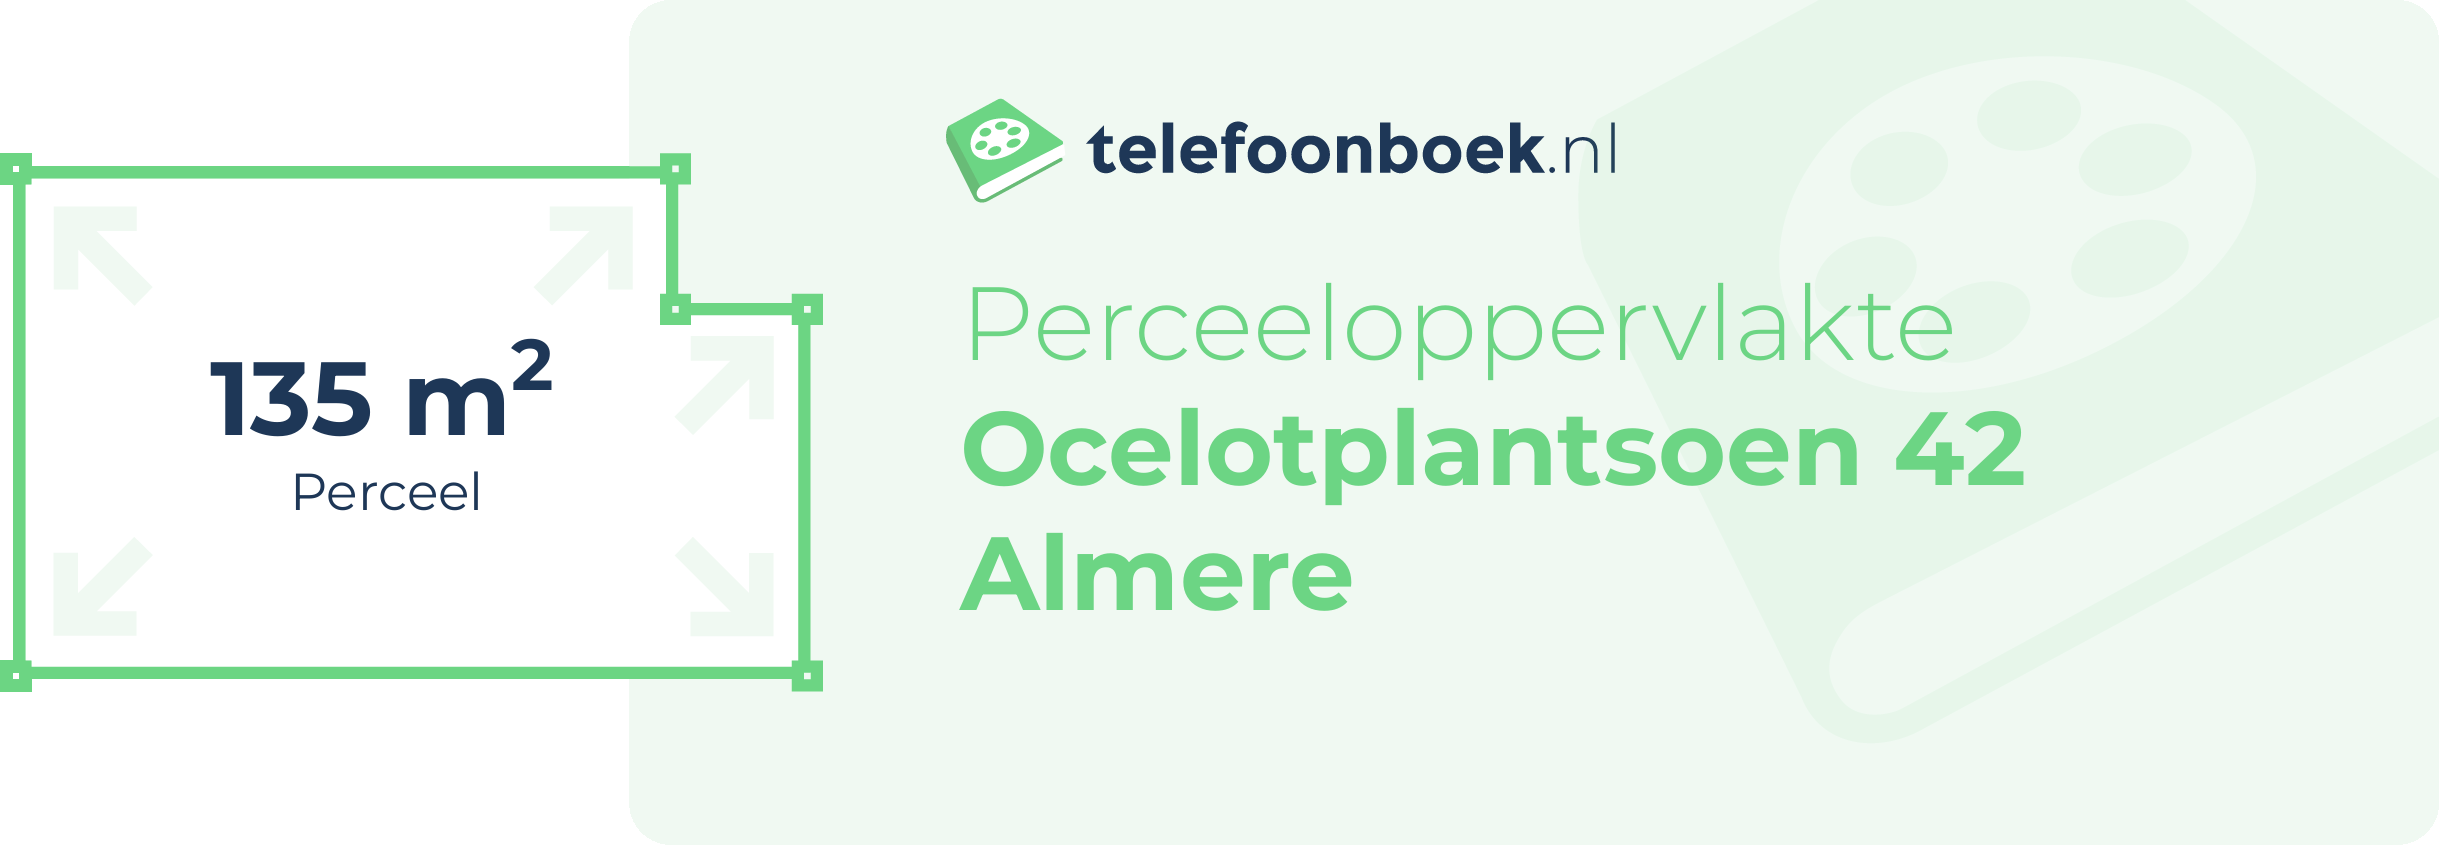 Perceeloppervlakte Ocelotplantsoen 42 Almere